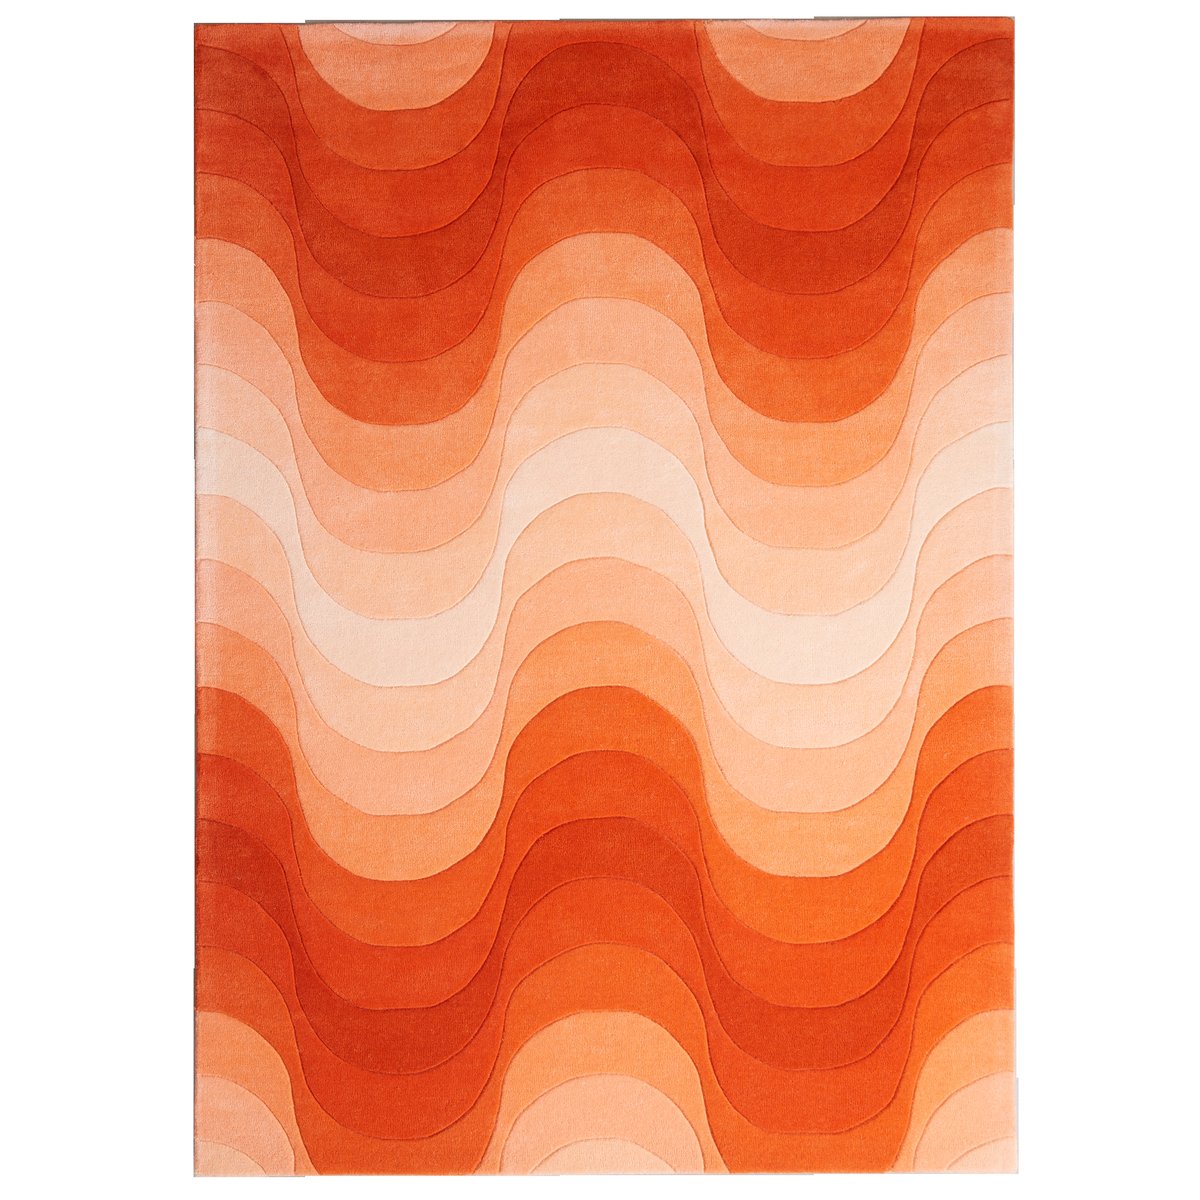 Verpan Wave vloerkleed 170x240 cm Oranje